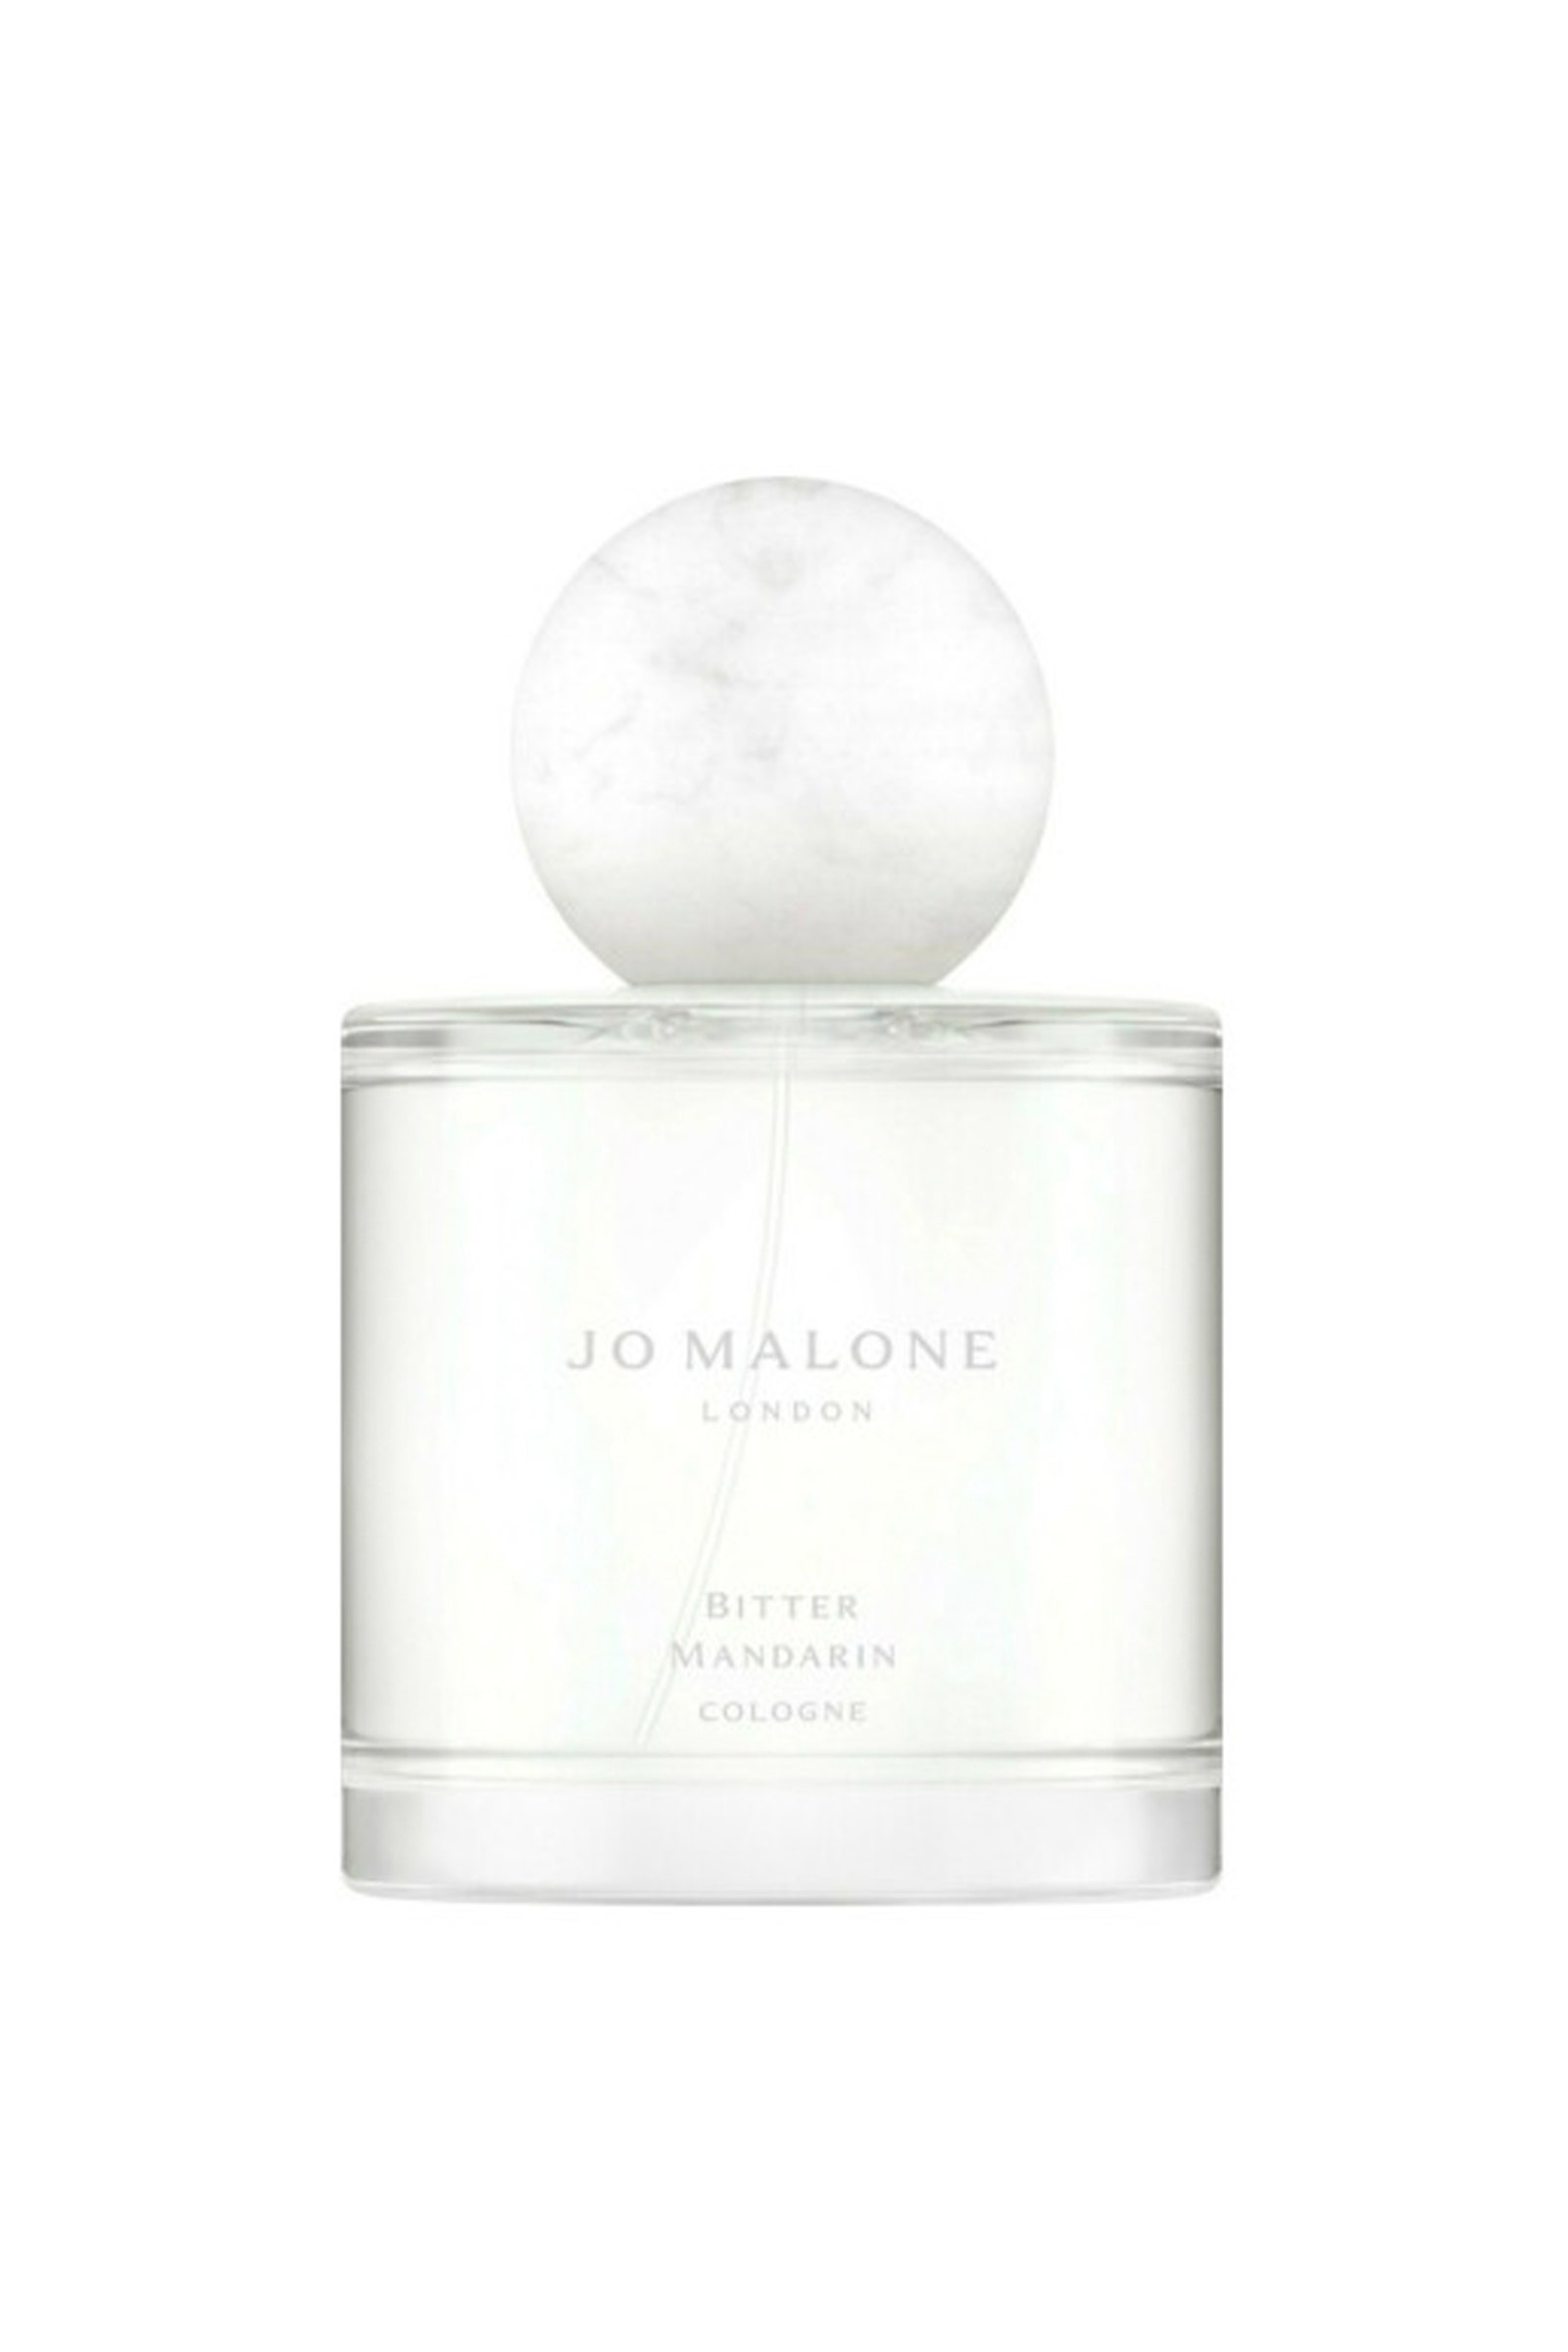 Perfume Bitter Mandarin de Jo Malone